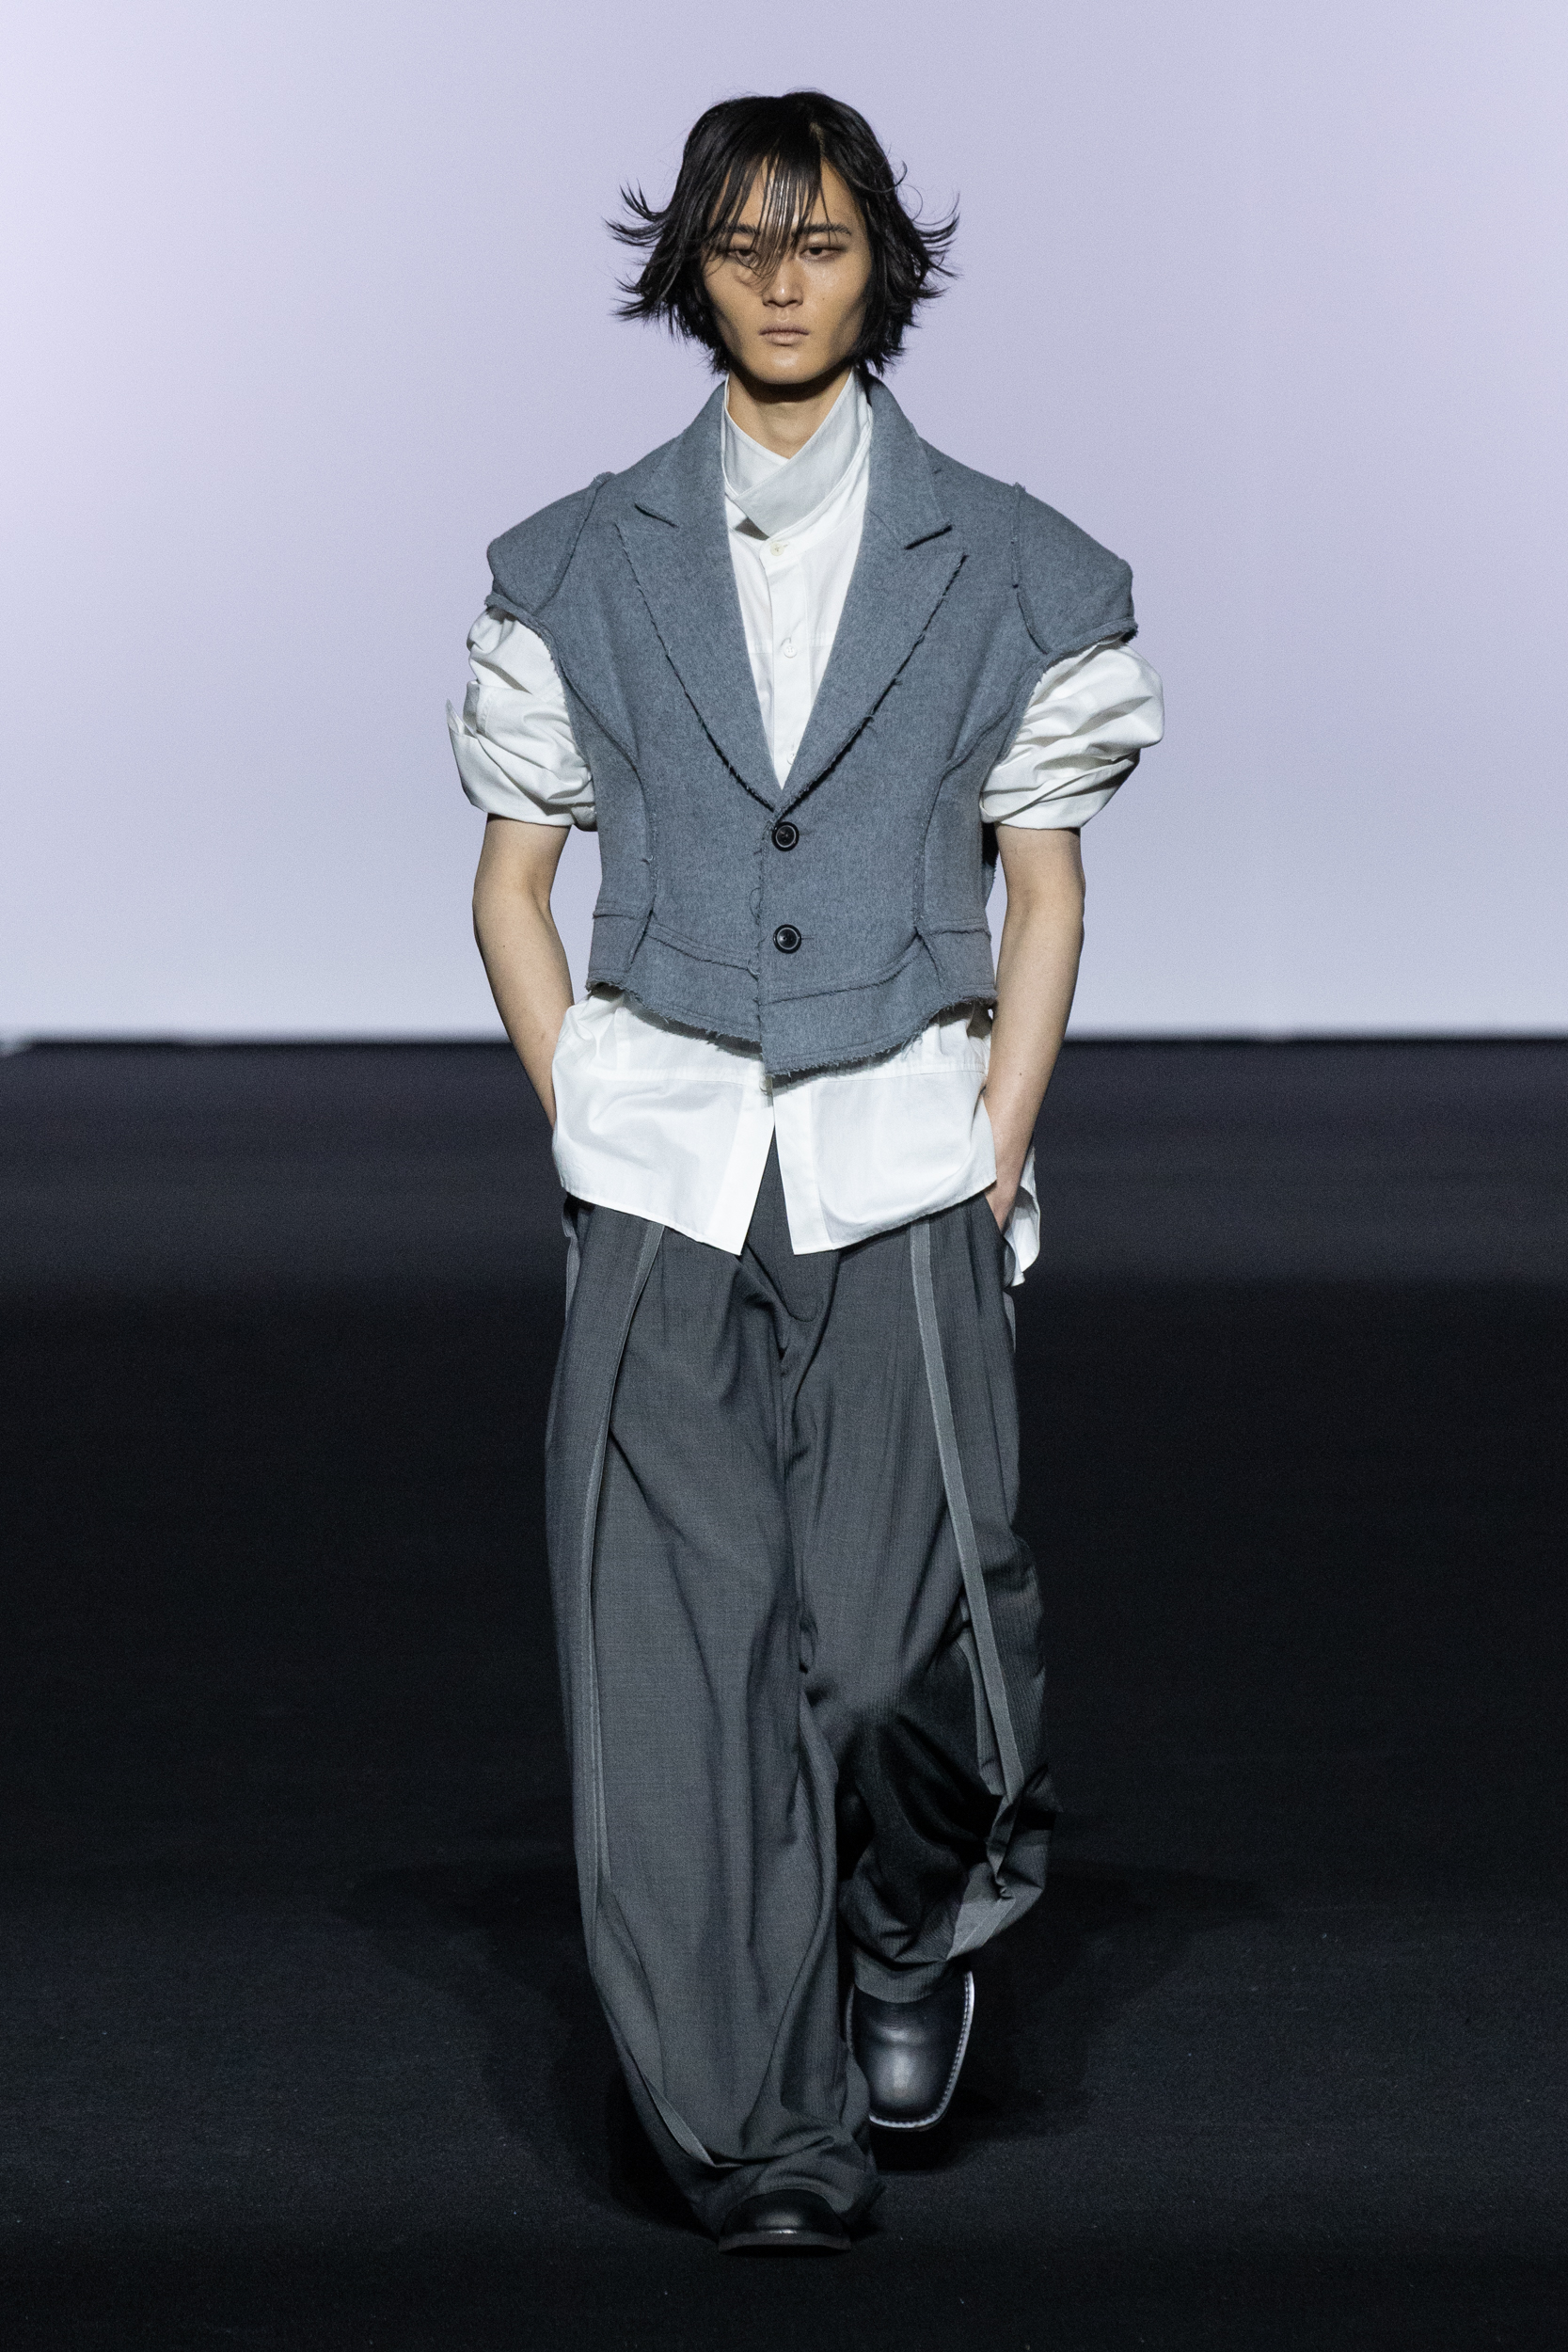 Iryuk Fall 2023 Fashion Show 